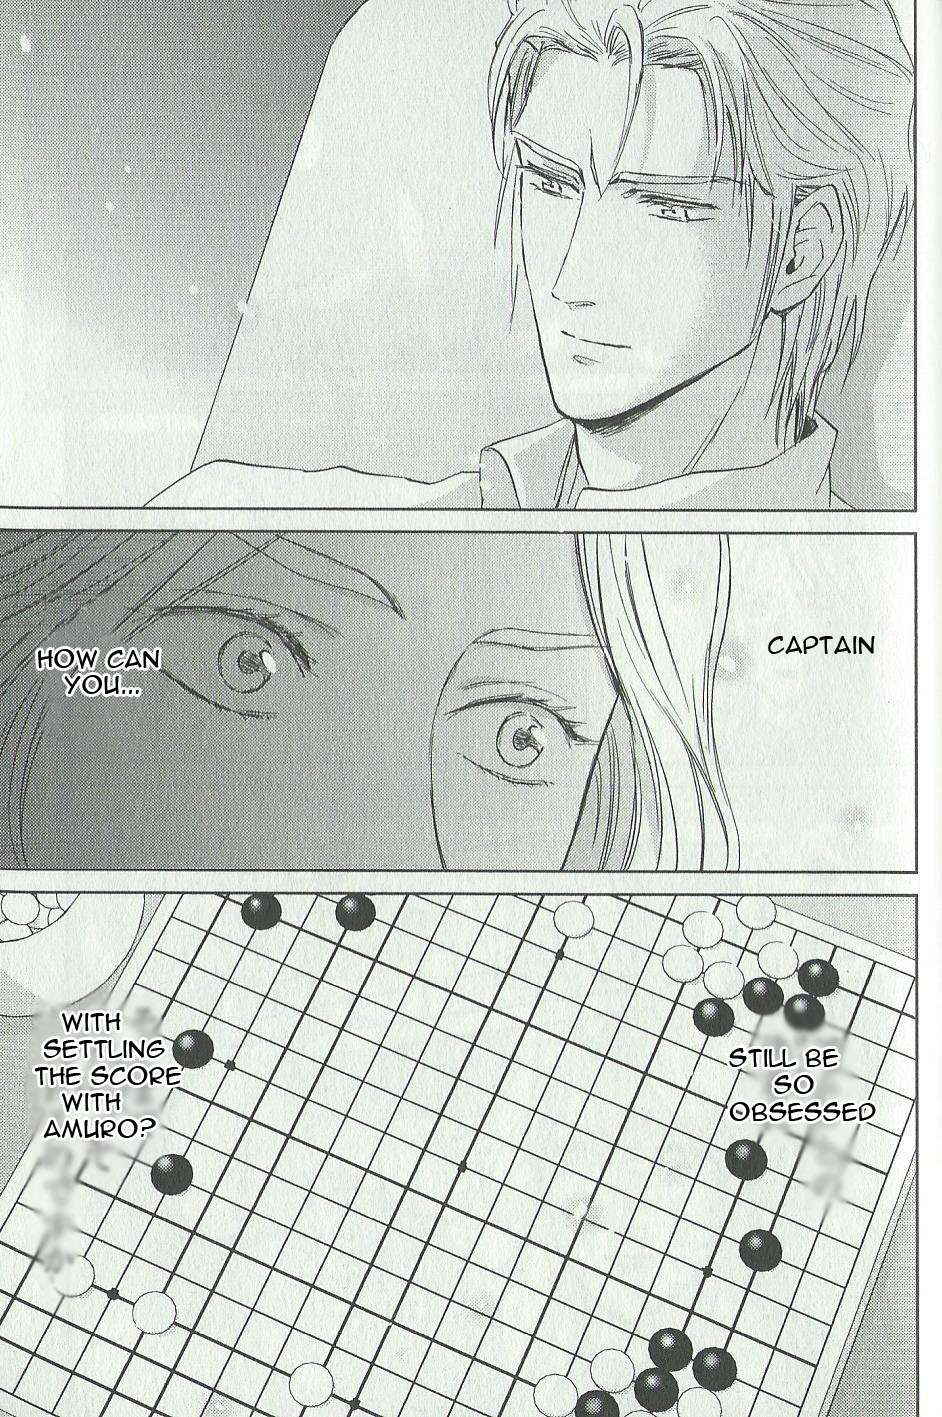 Kidou Senshi Gundam Gyakushuu no Char: Beyond the Time Vol. 2 Ch. 10 ν Gundam